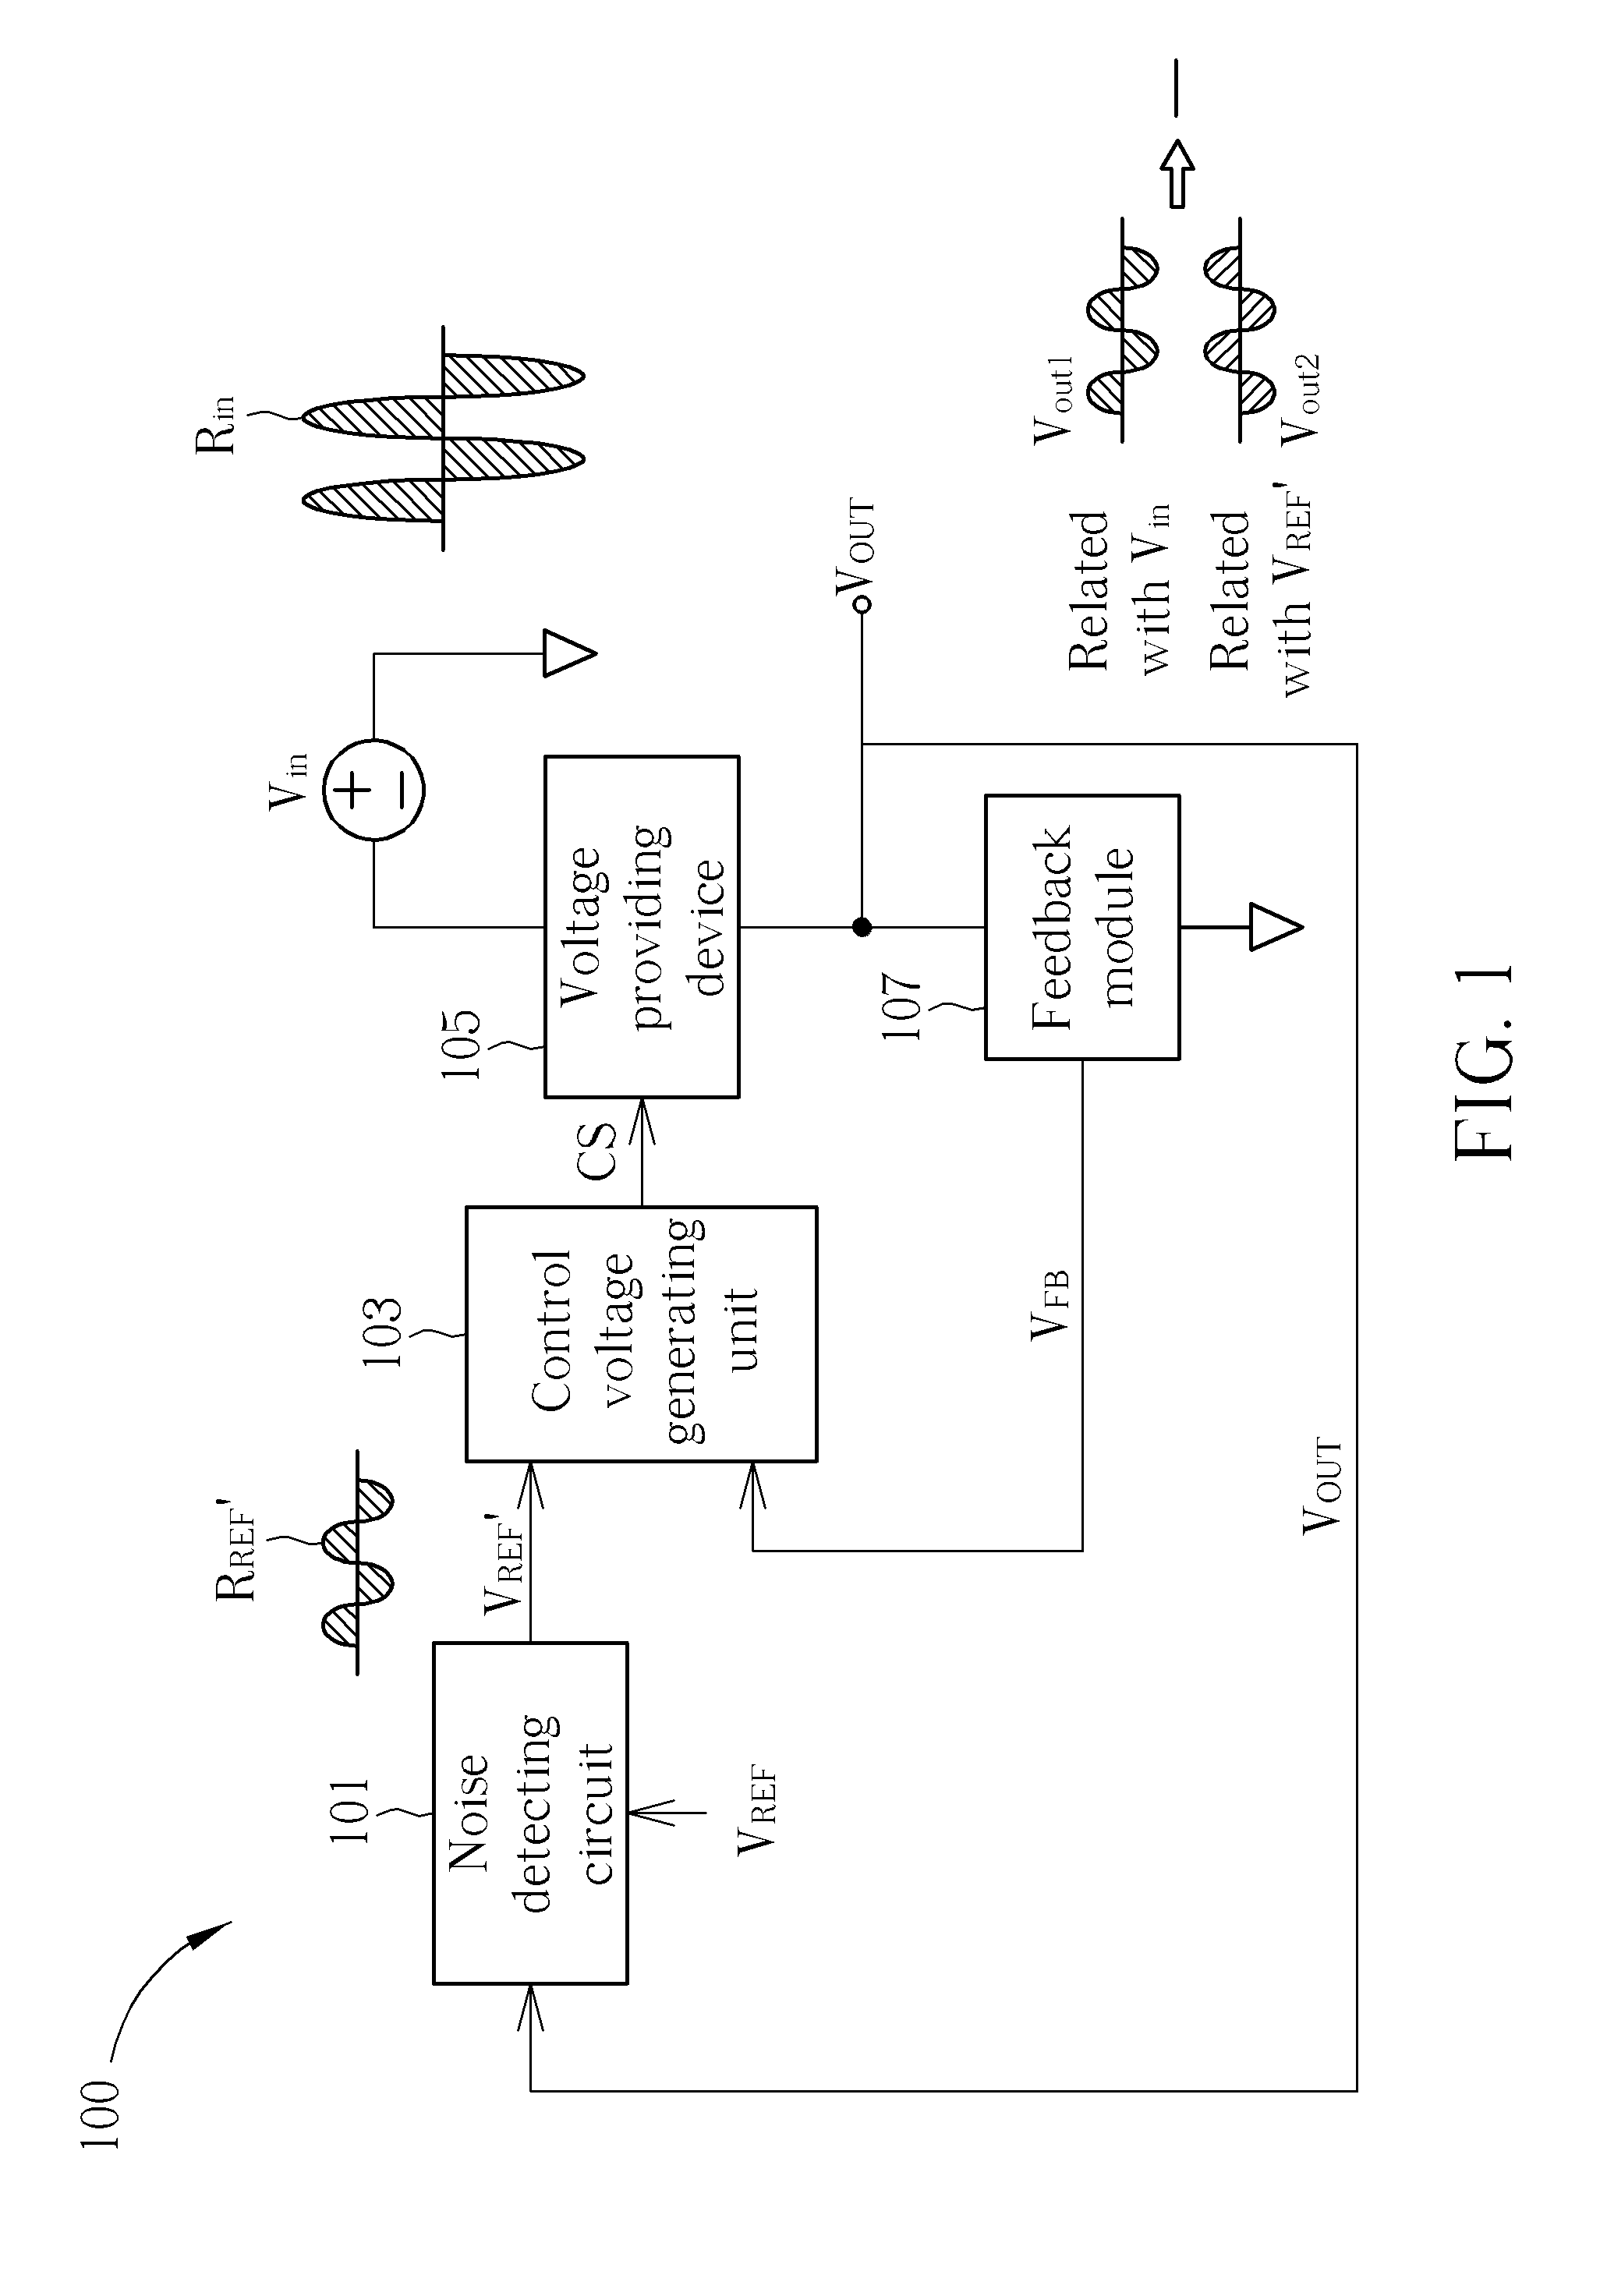 Power supplying circuit and power supplying method